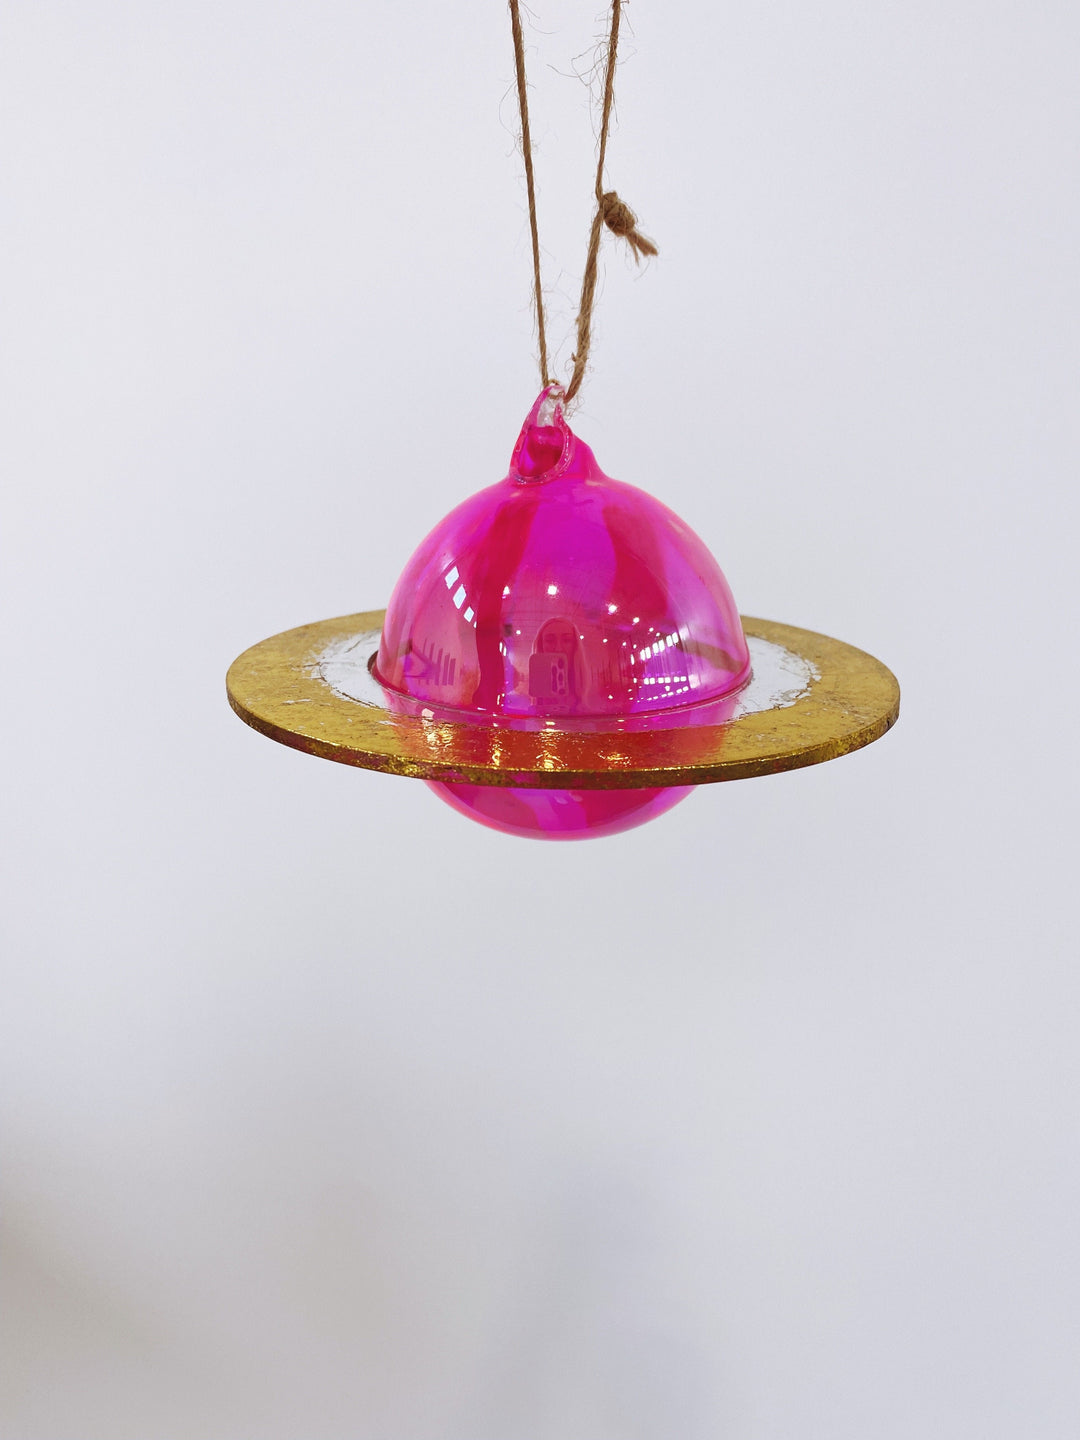 PLANET GLASS ORNAMENT Glitterville Christmas Ornament PINK PLANET Bonjour Fete - Party Supplies